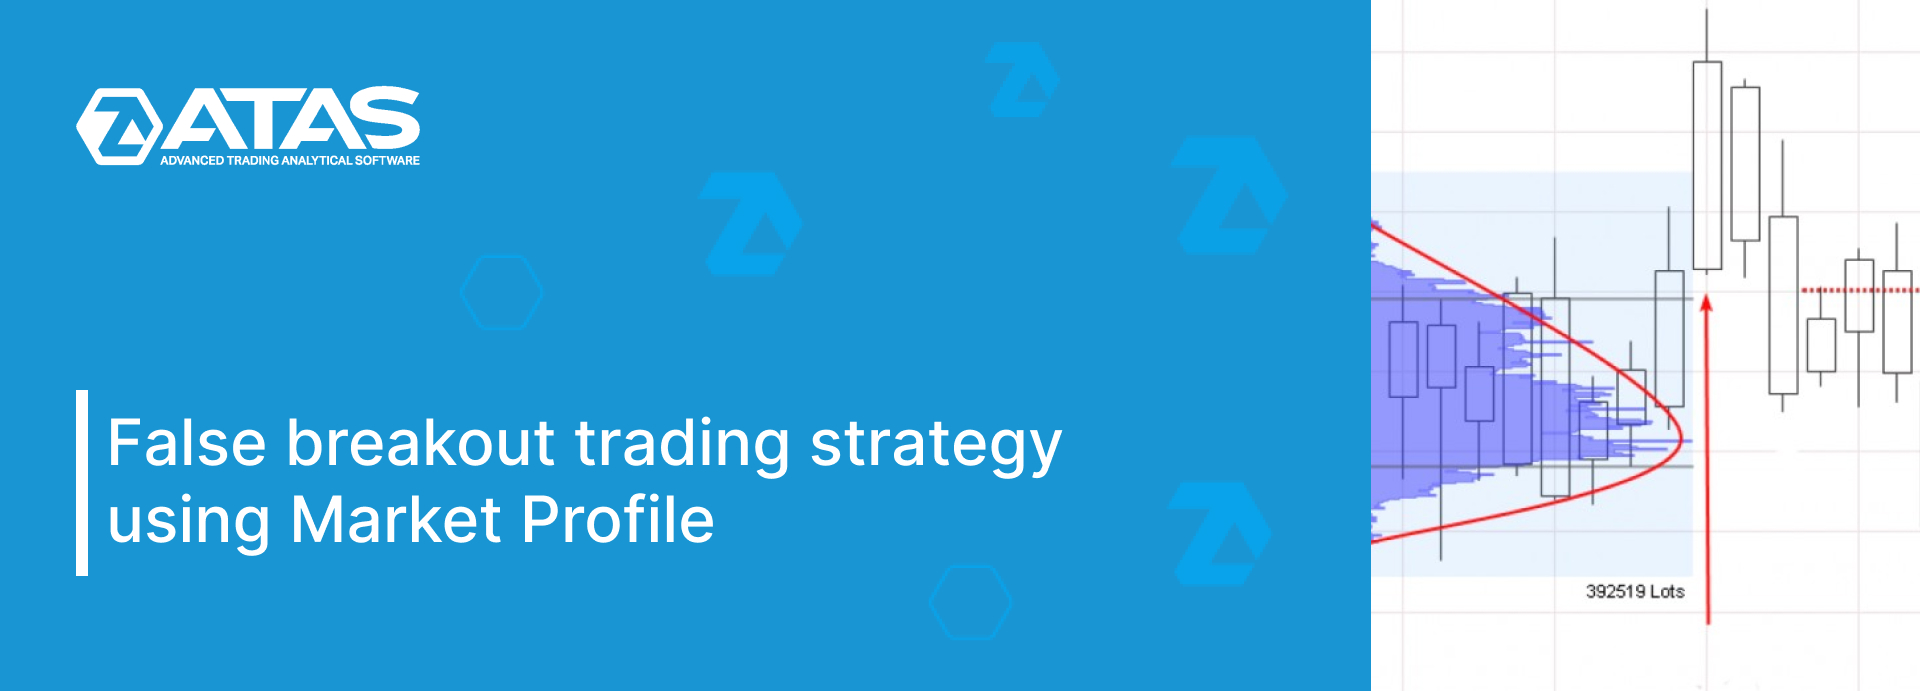 False breakout trading strategy using Market Profile